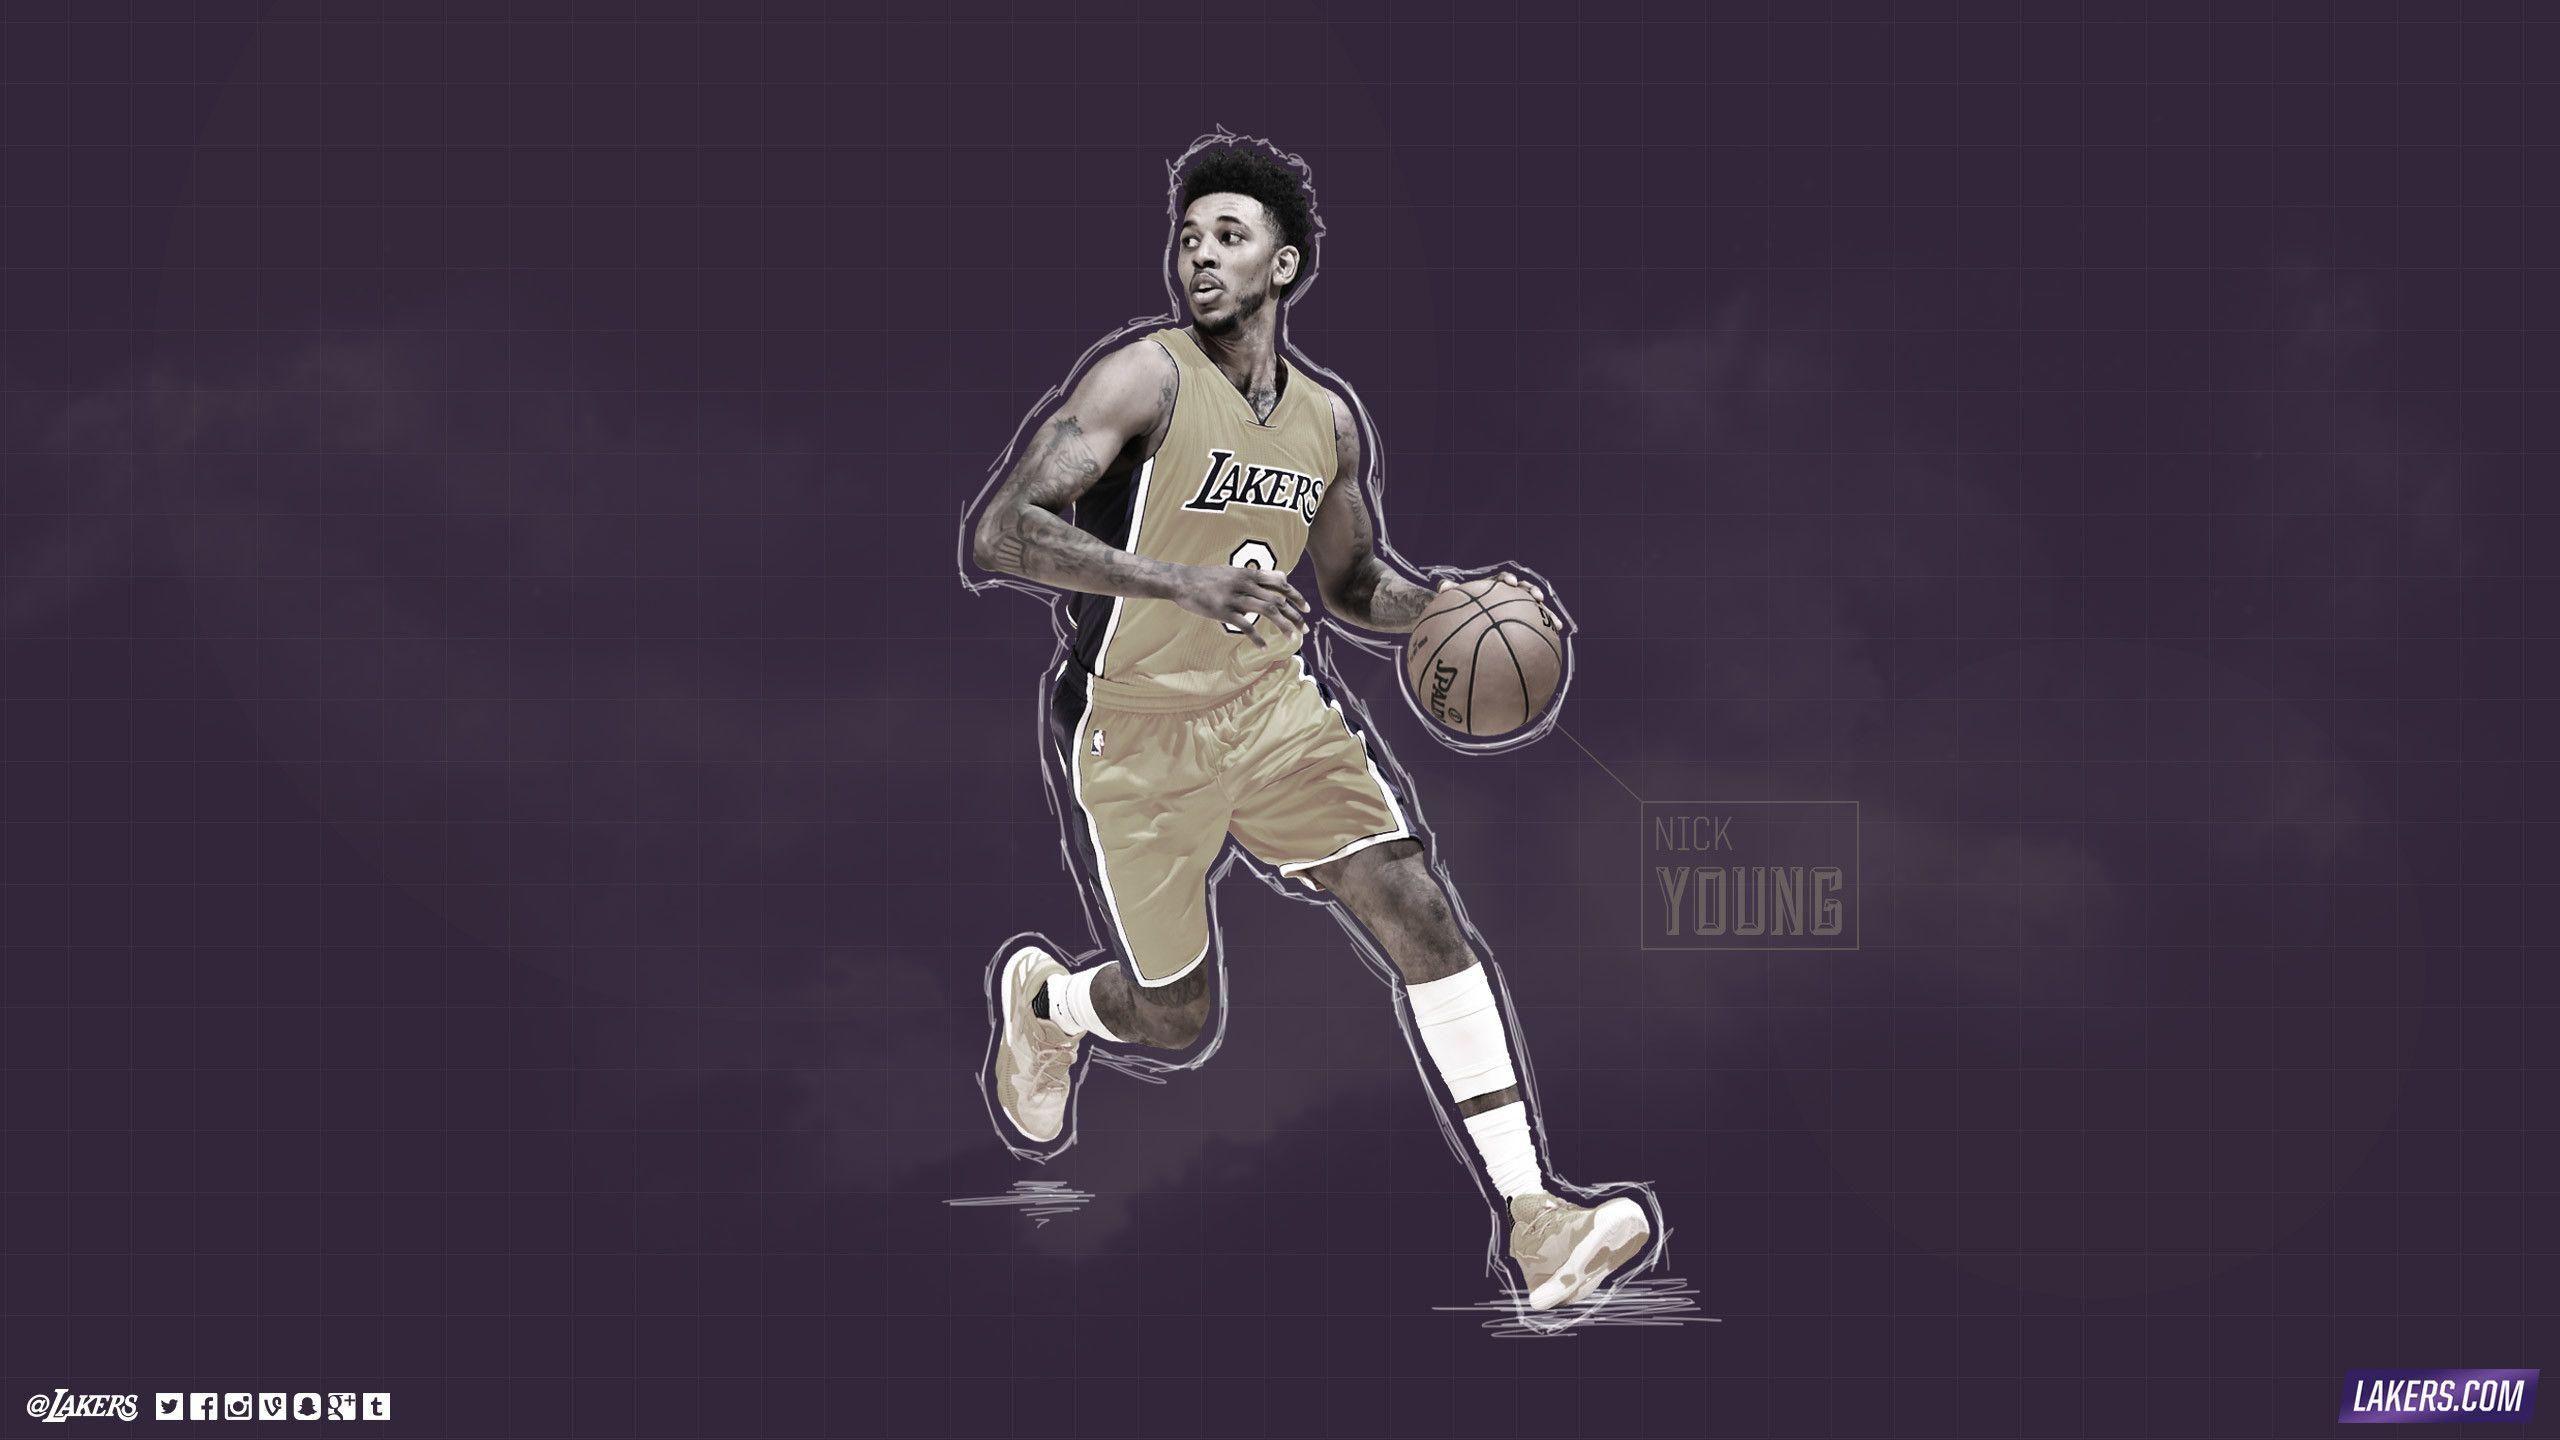 Nick Young Wallpaper Lakers